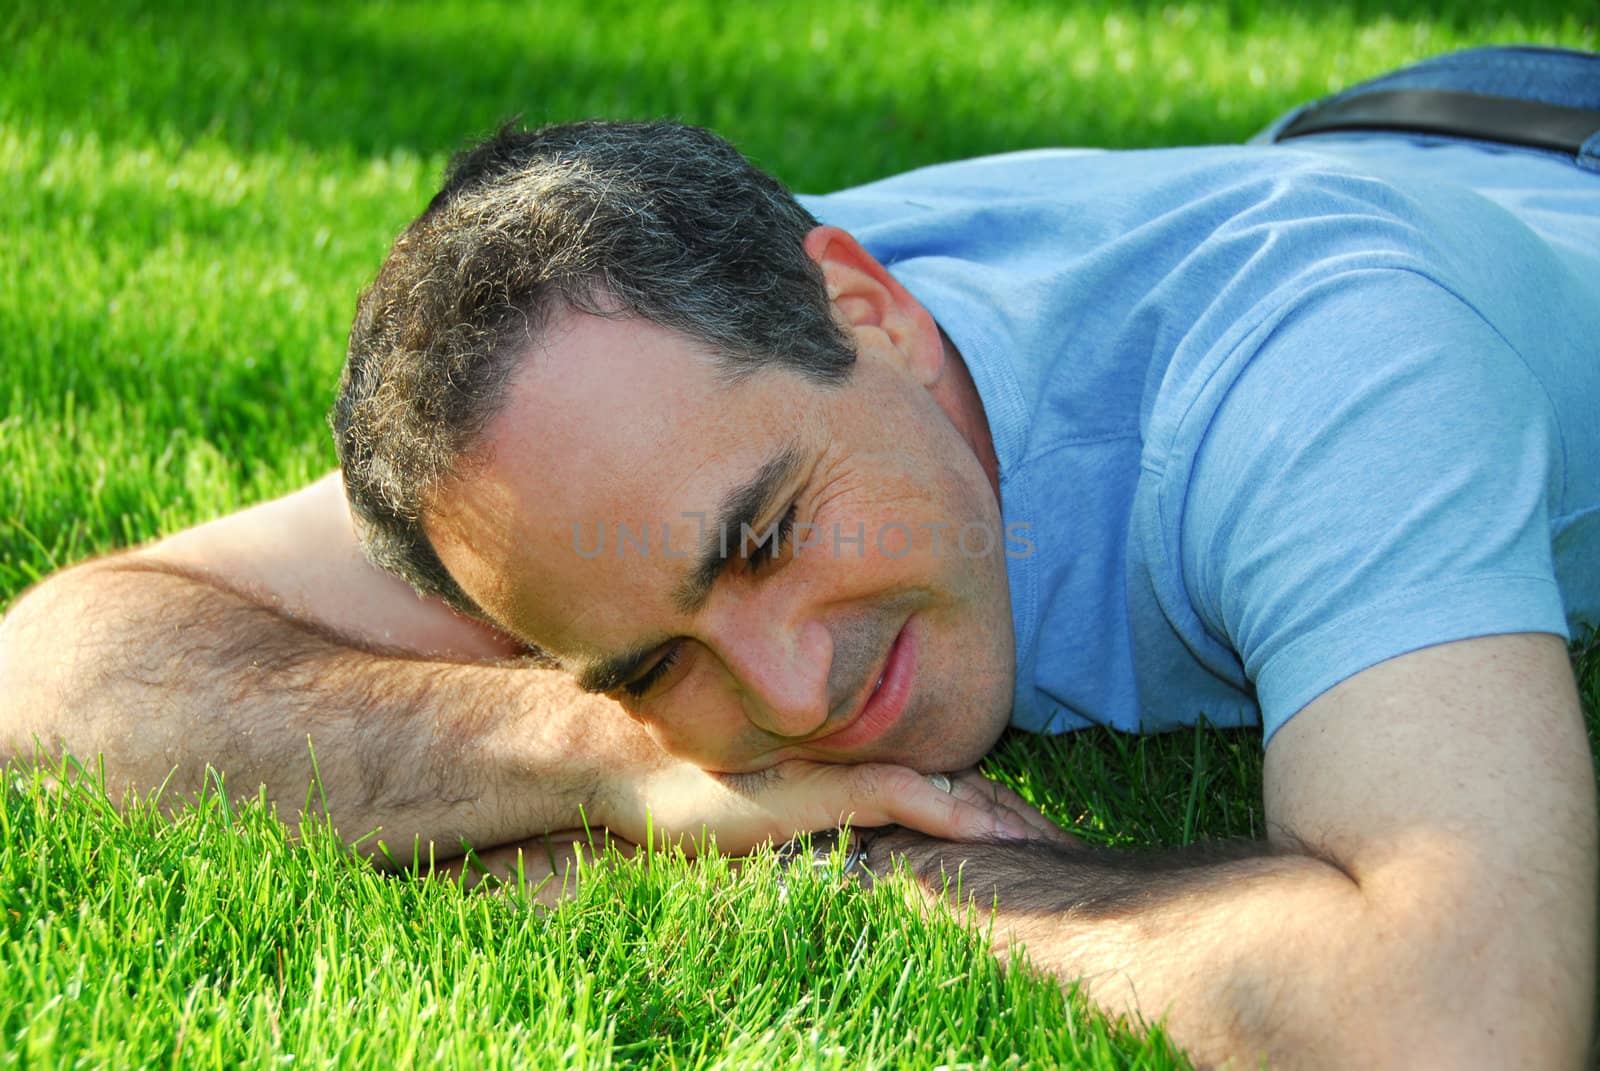 Man on grass by elenathewise